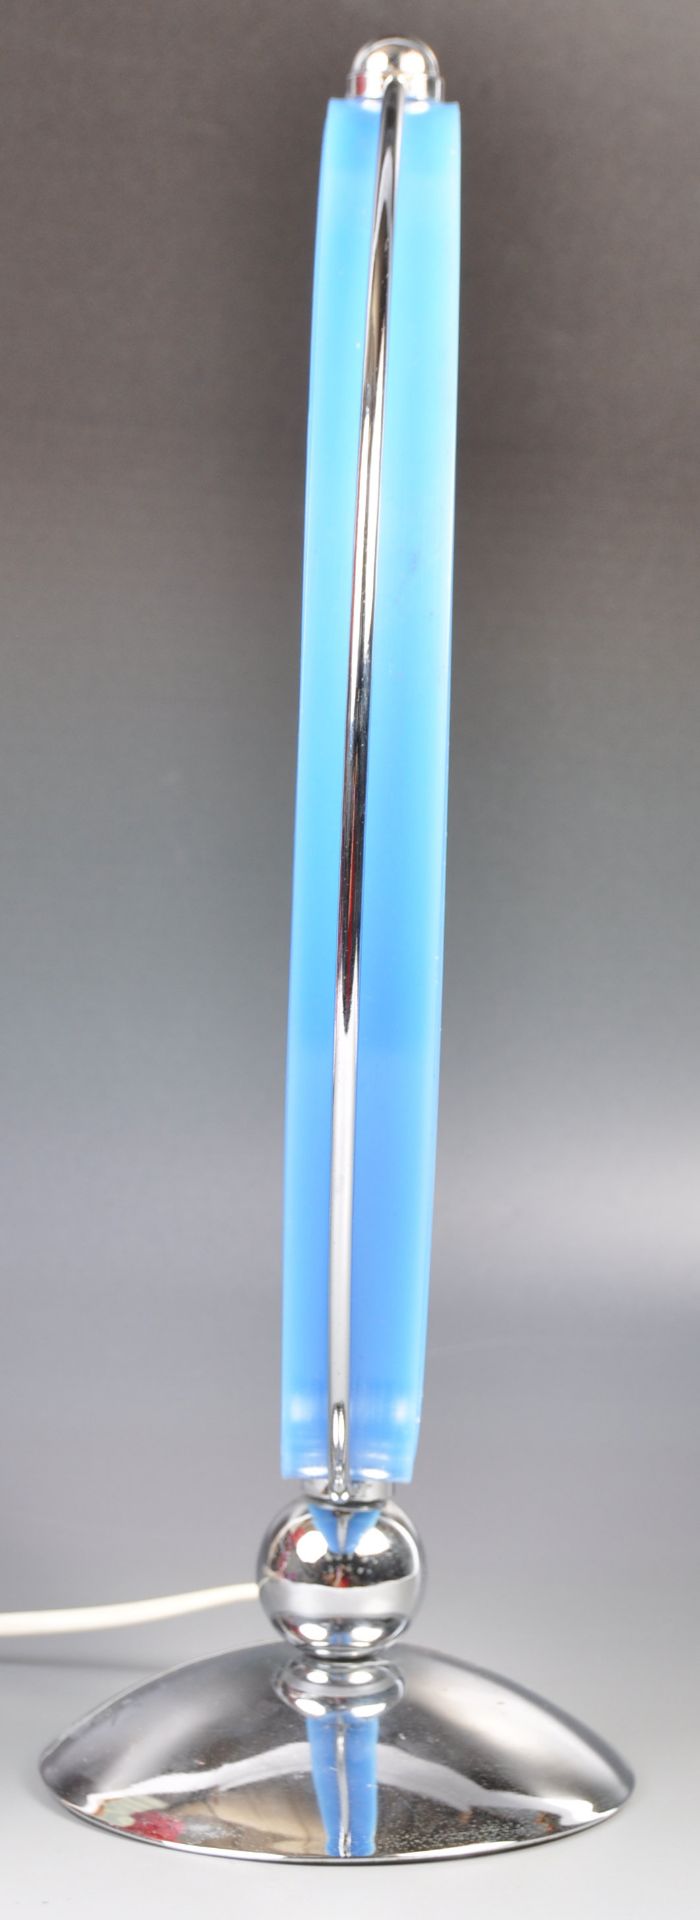 VERNER PANTON FOR LOUIS POULSEN MOON LAMP LIGHT HAVING A BLUE ARTICULATED SHADE - Bild 4 aus 5